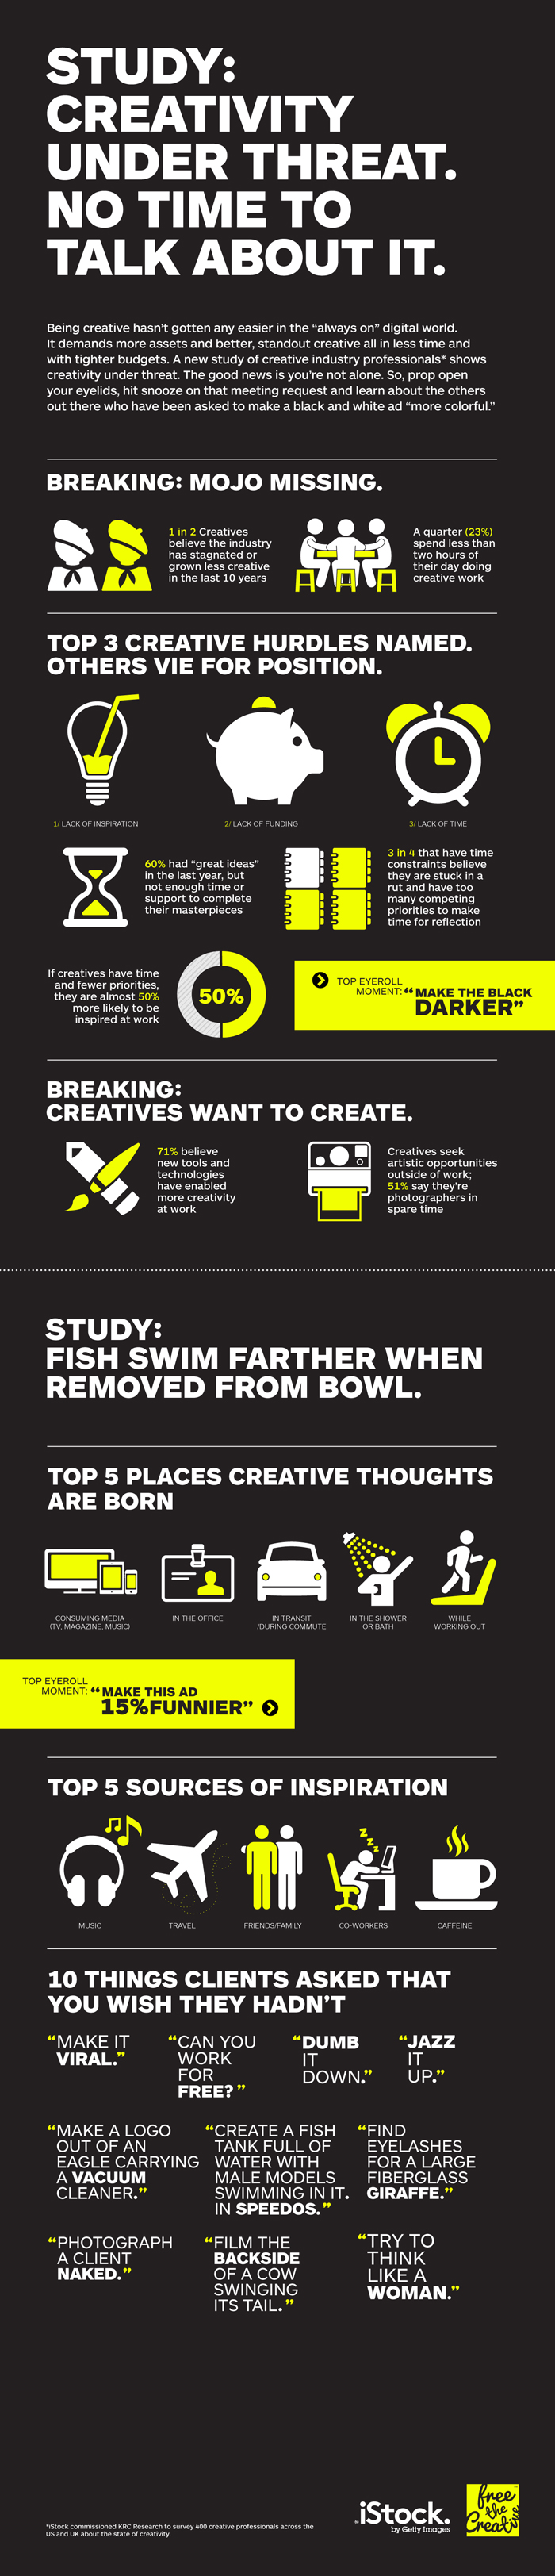 (Infographic bemoaning the creative life)